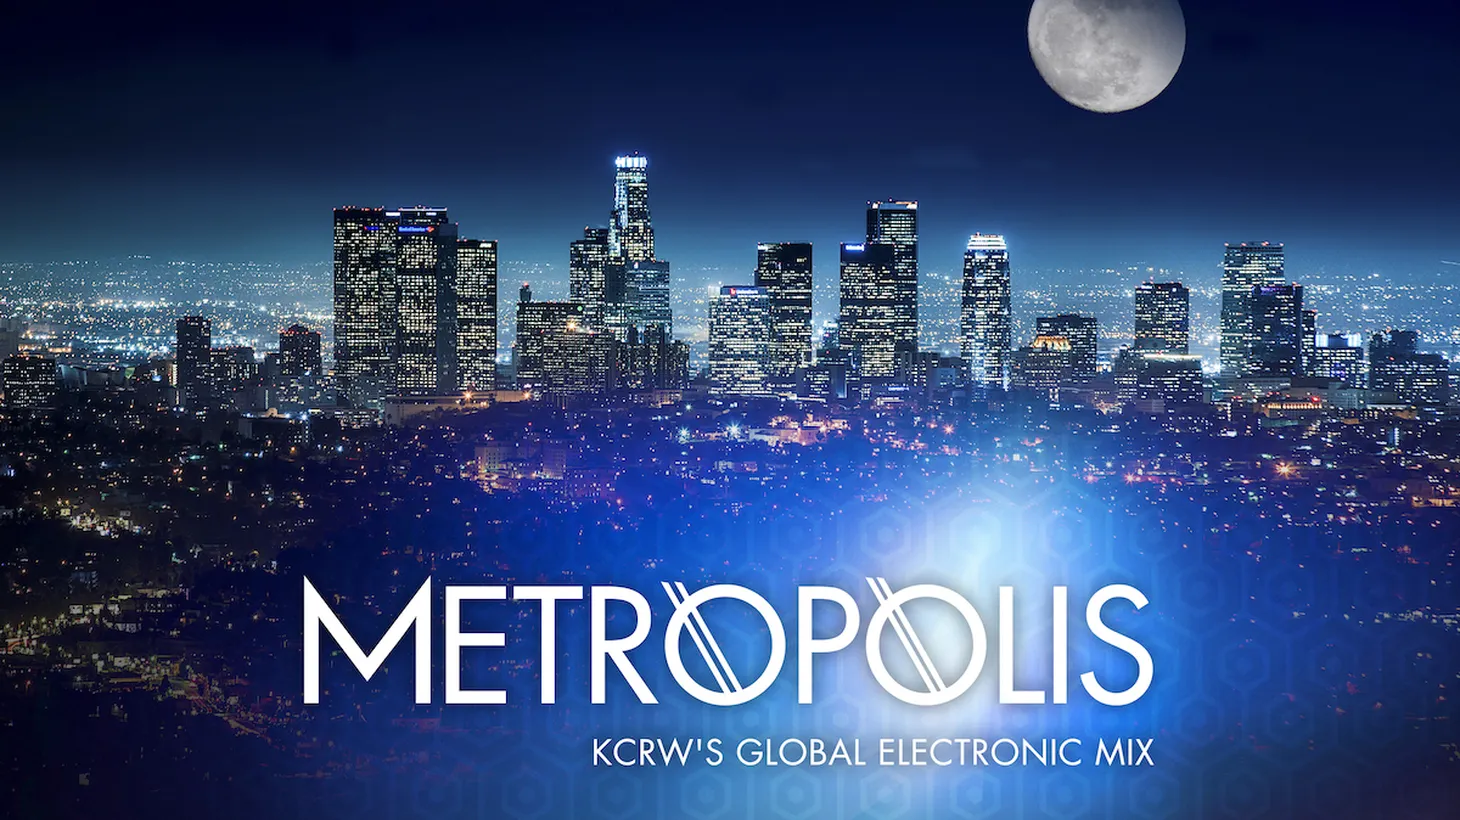 Metropolis playlist, February 12, 2022.